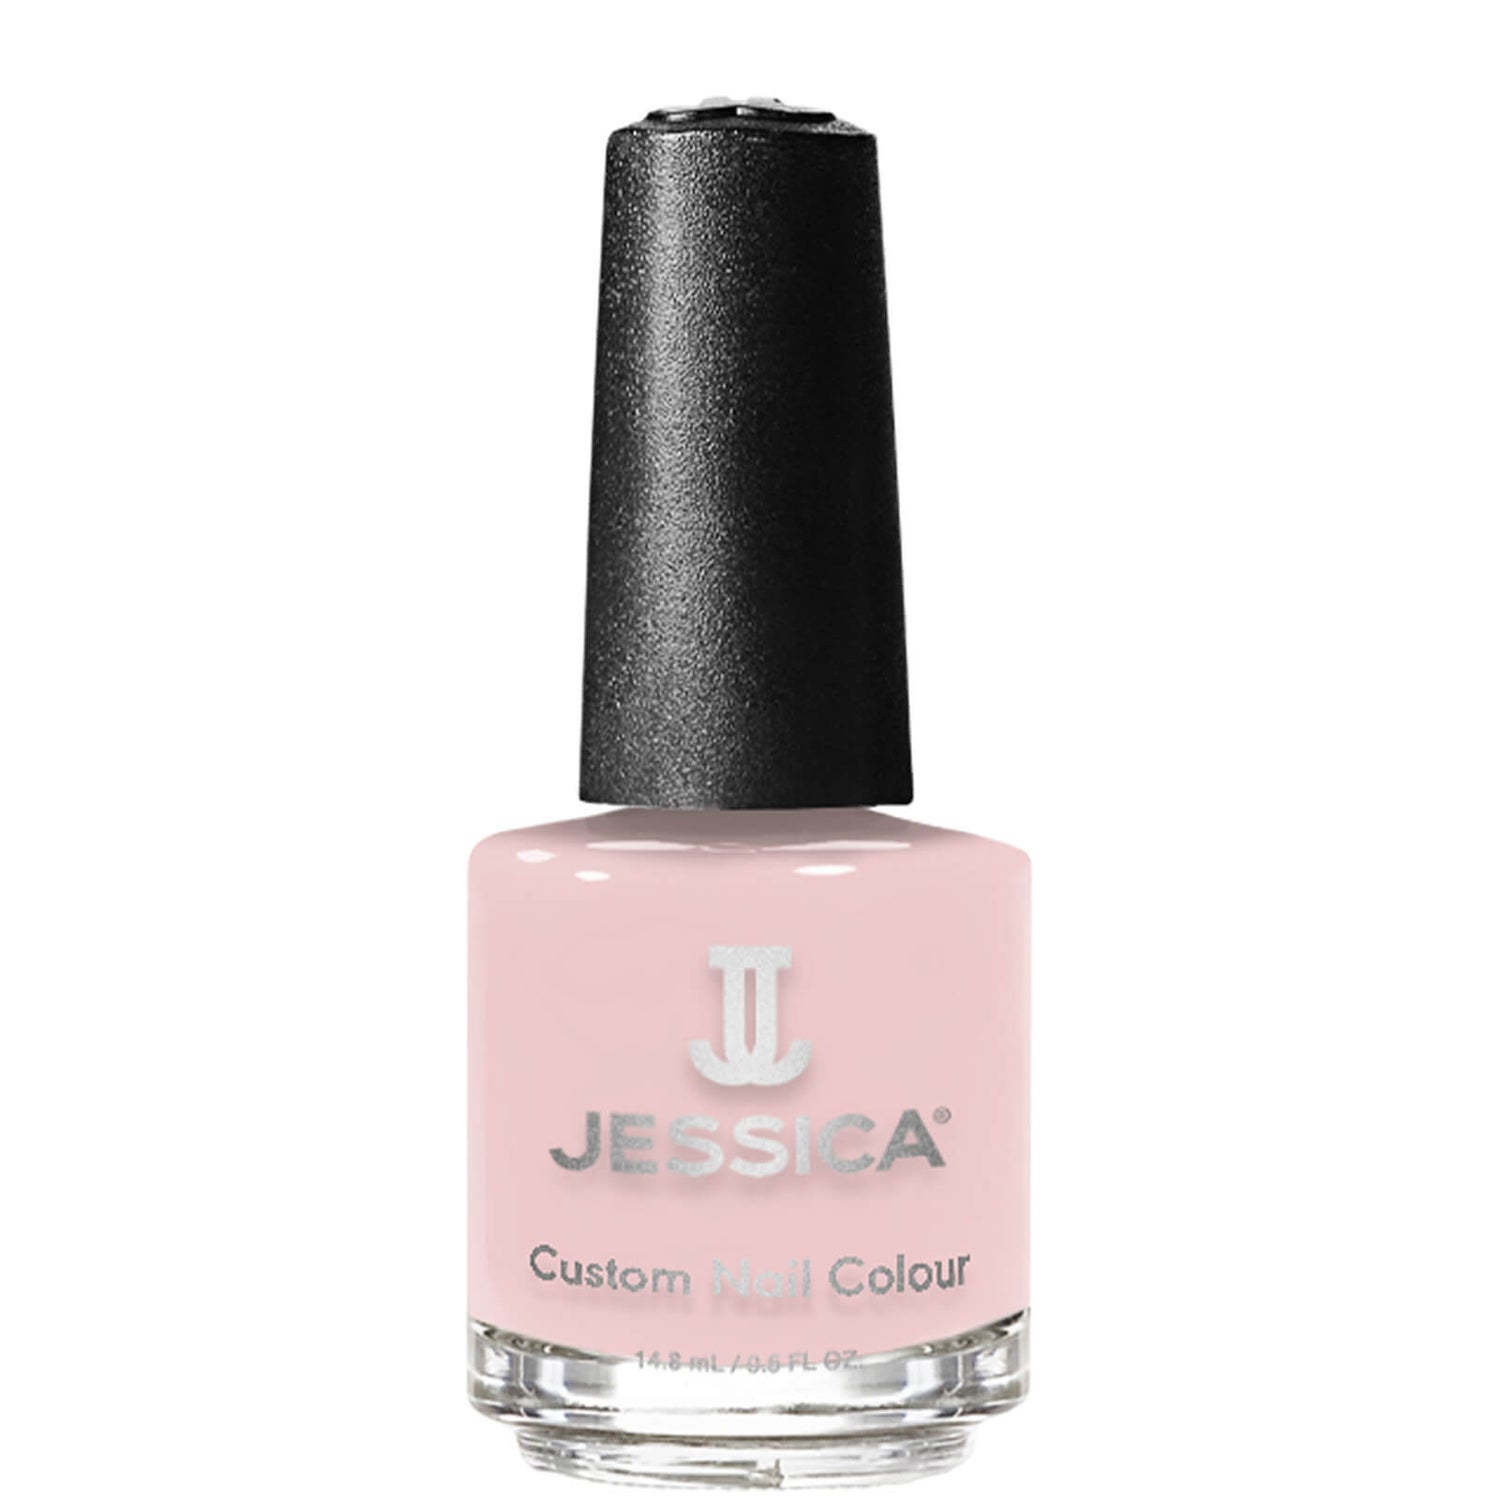 Jessica Custom Colour Nail Polish 14.8ml (Diverses nuances)